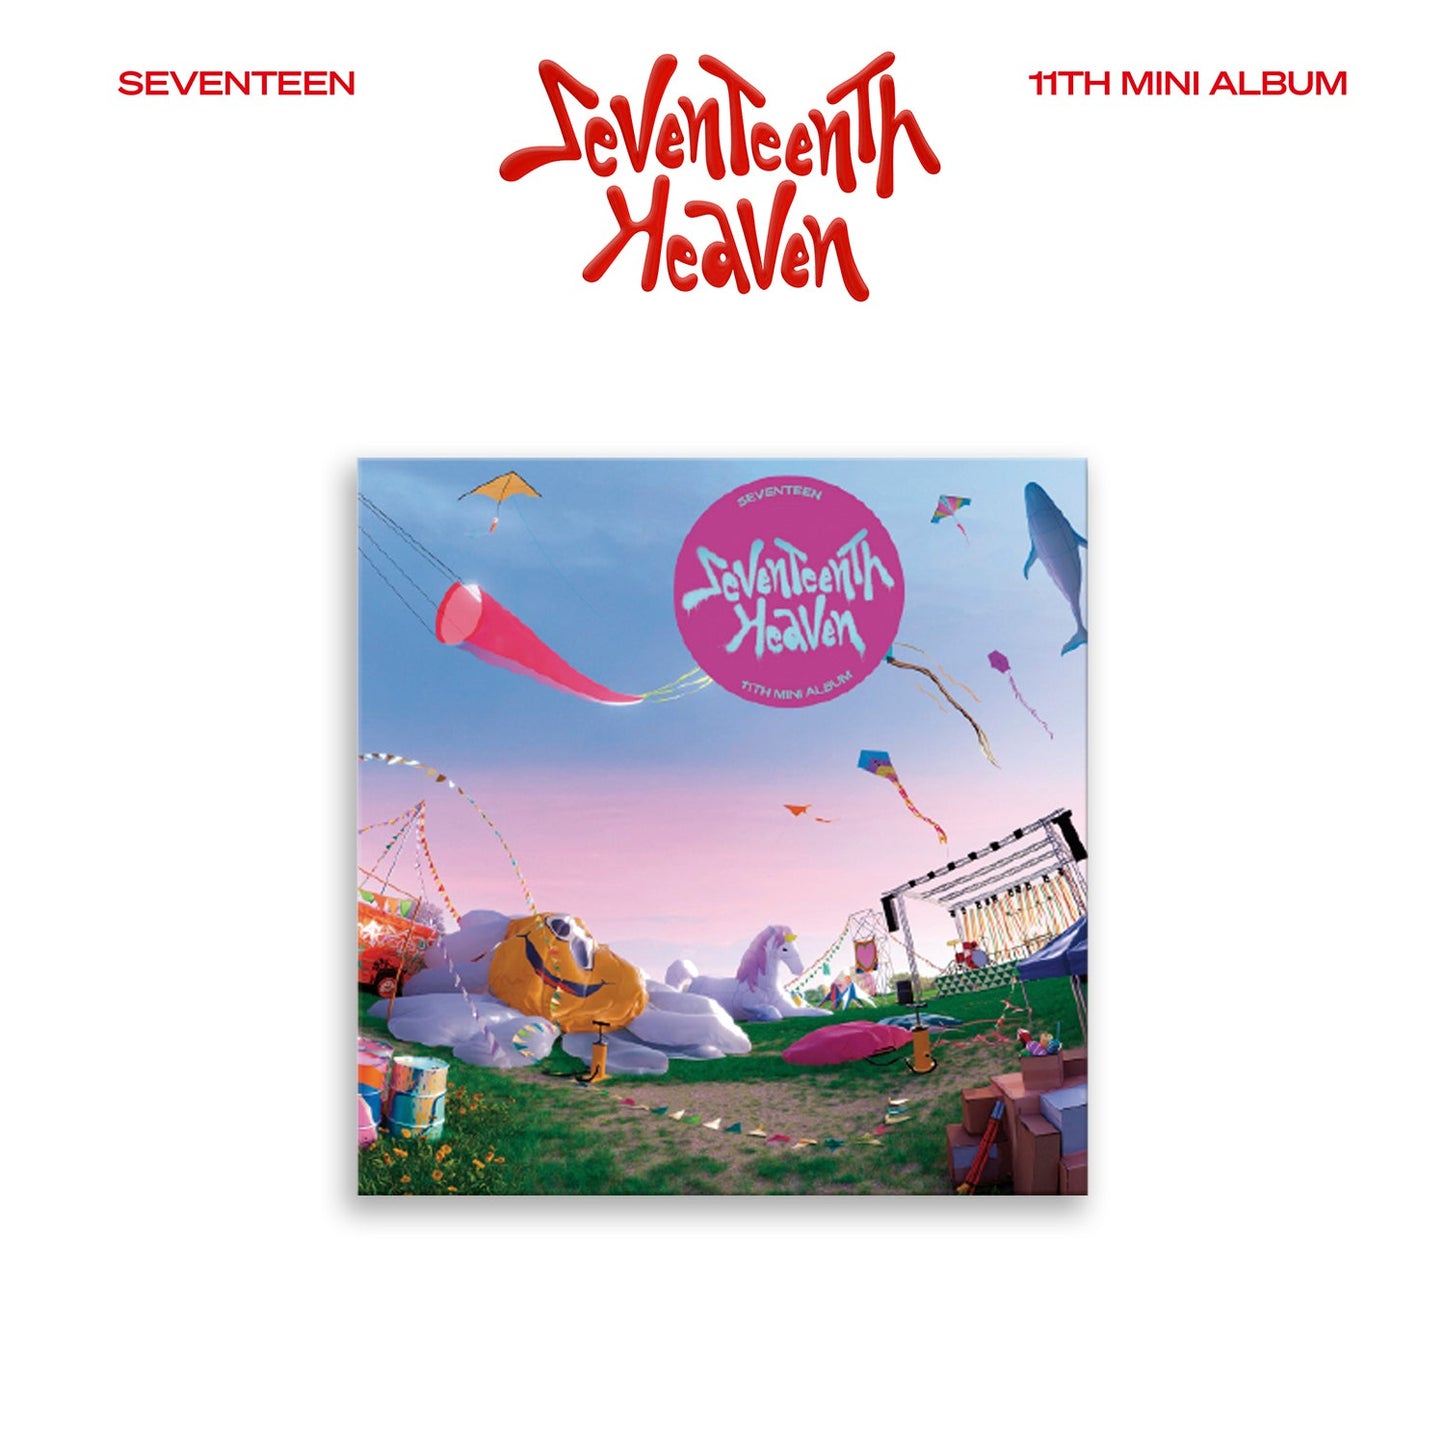 SEVENTEEN 11TH MINI ALBUM 'SEVENTEENTH HEAVEN' AM 5:26 VERSION COVER